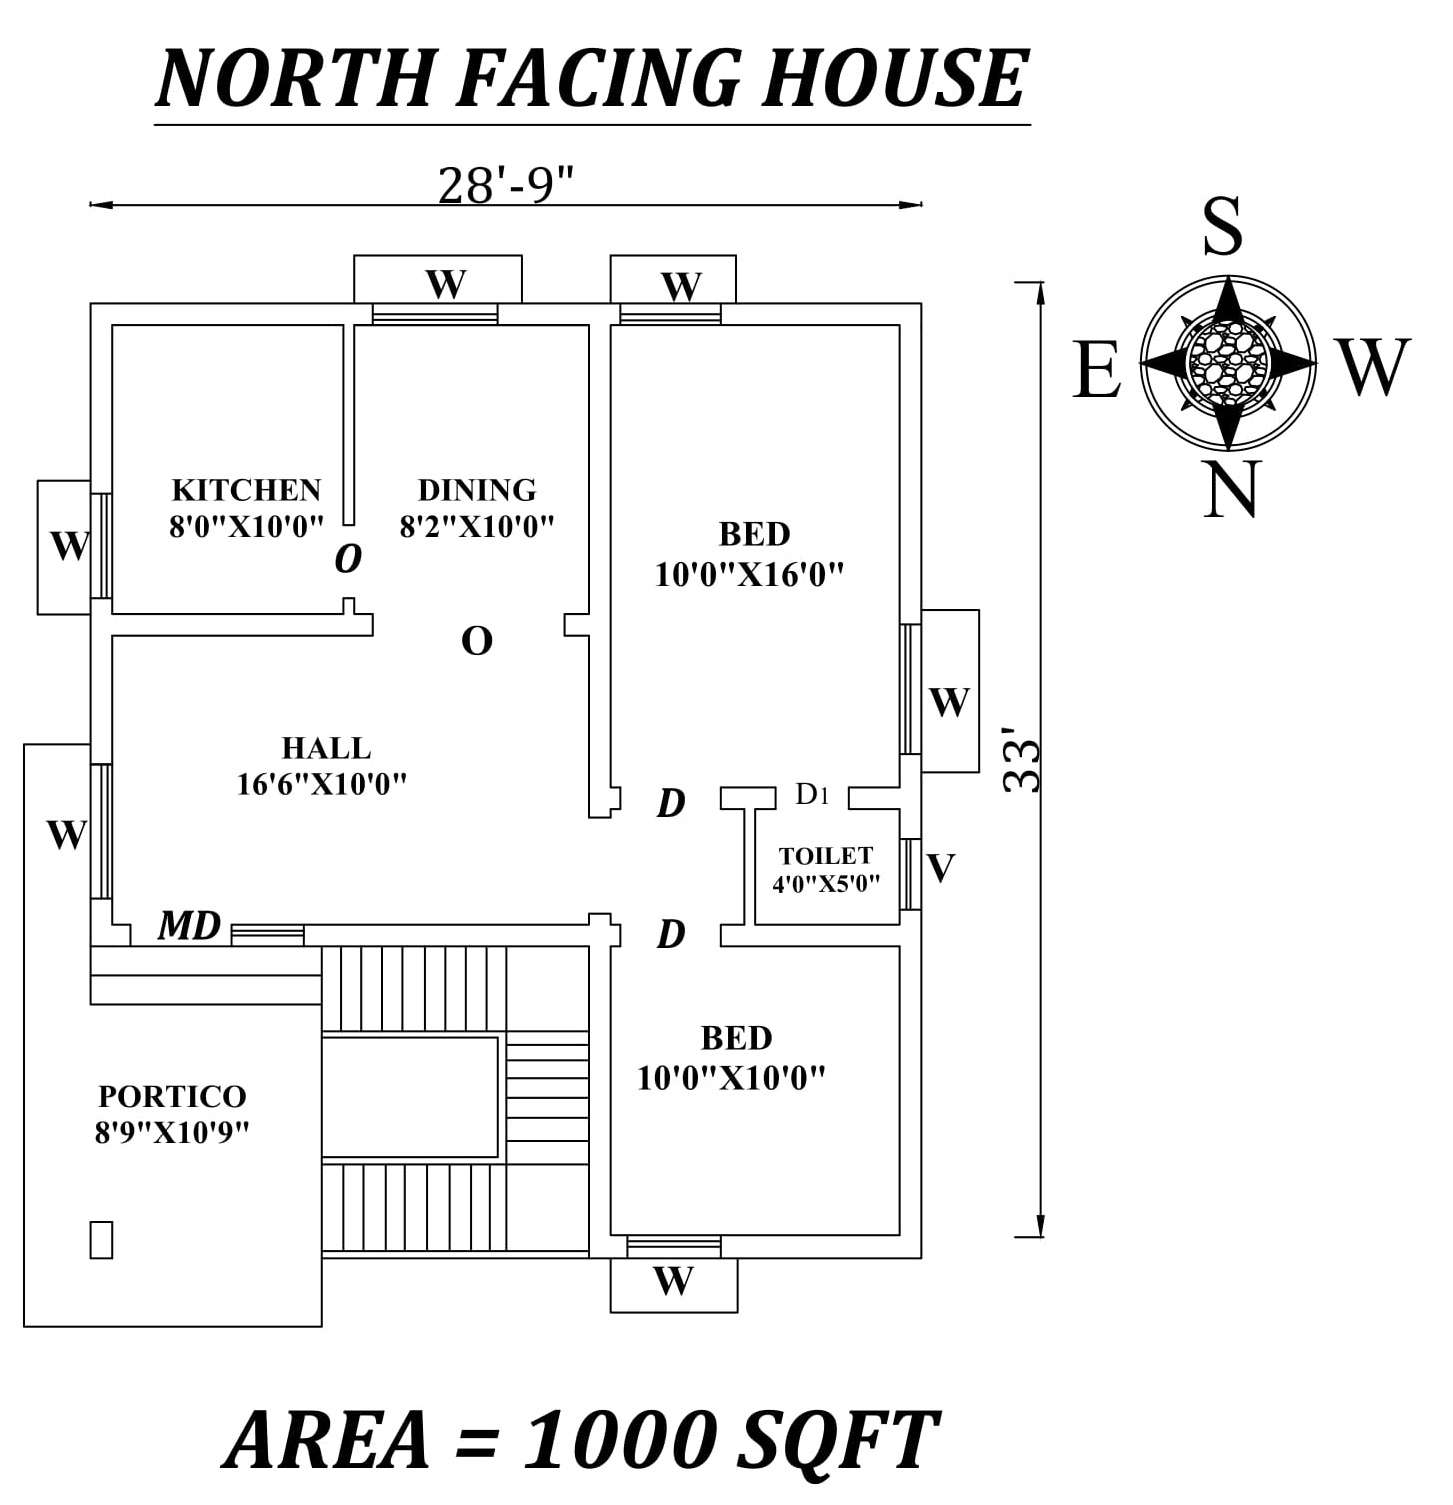 28'9"x33' Amazing North facing 2bhk house plan as per Vastu Shastra